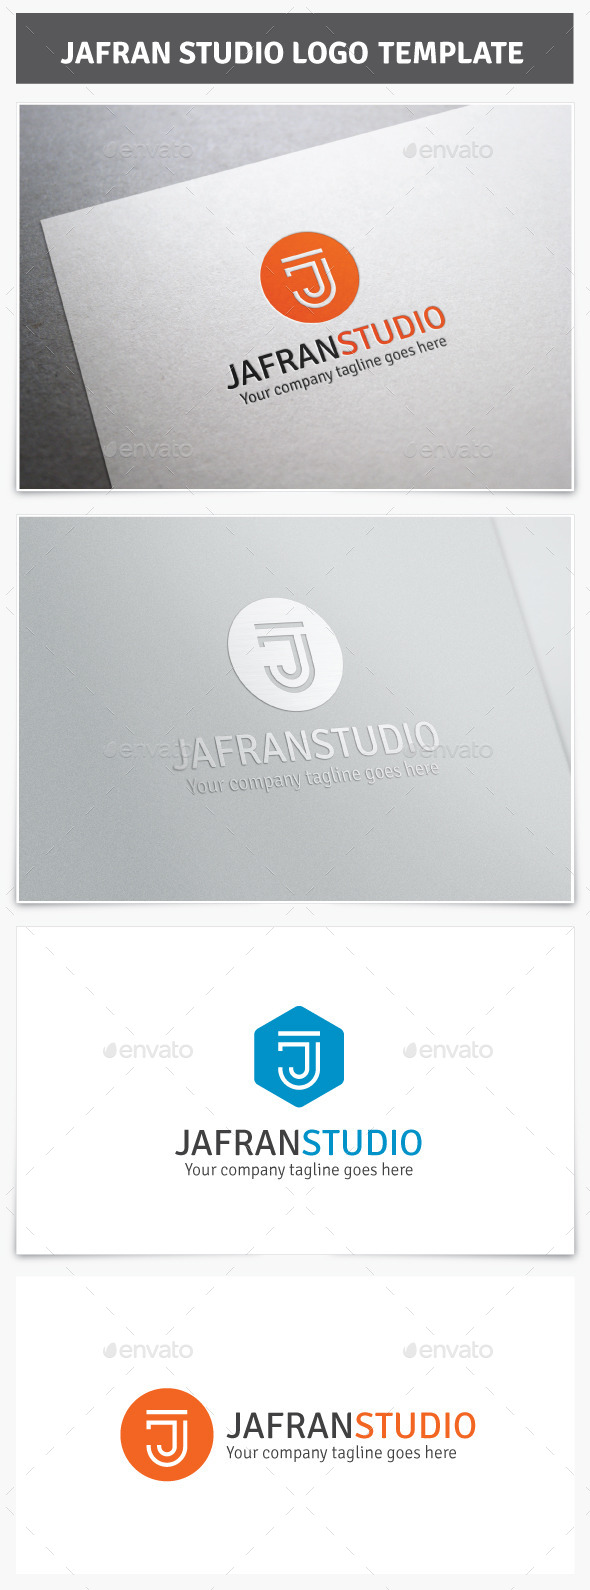 Jafran Studio Logo